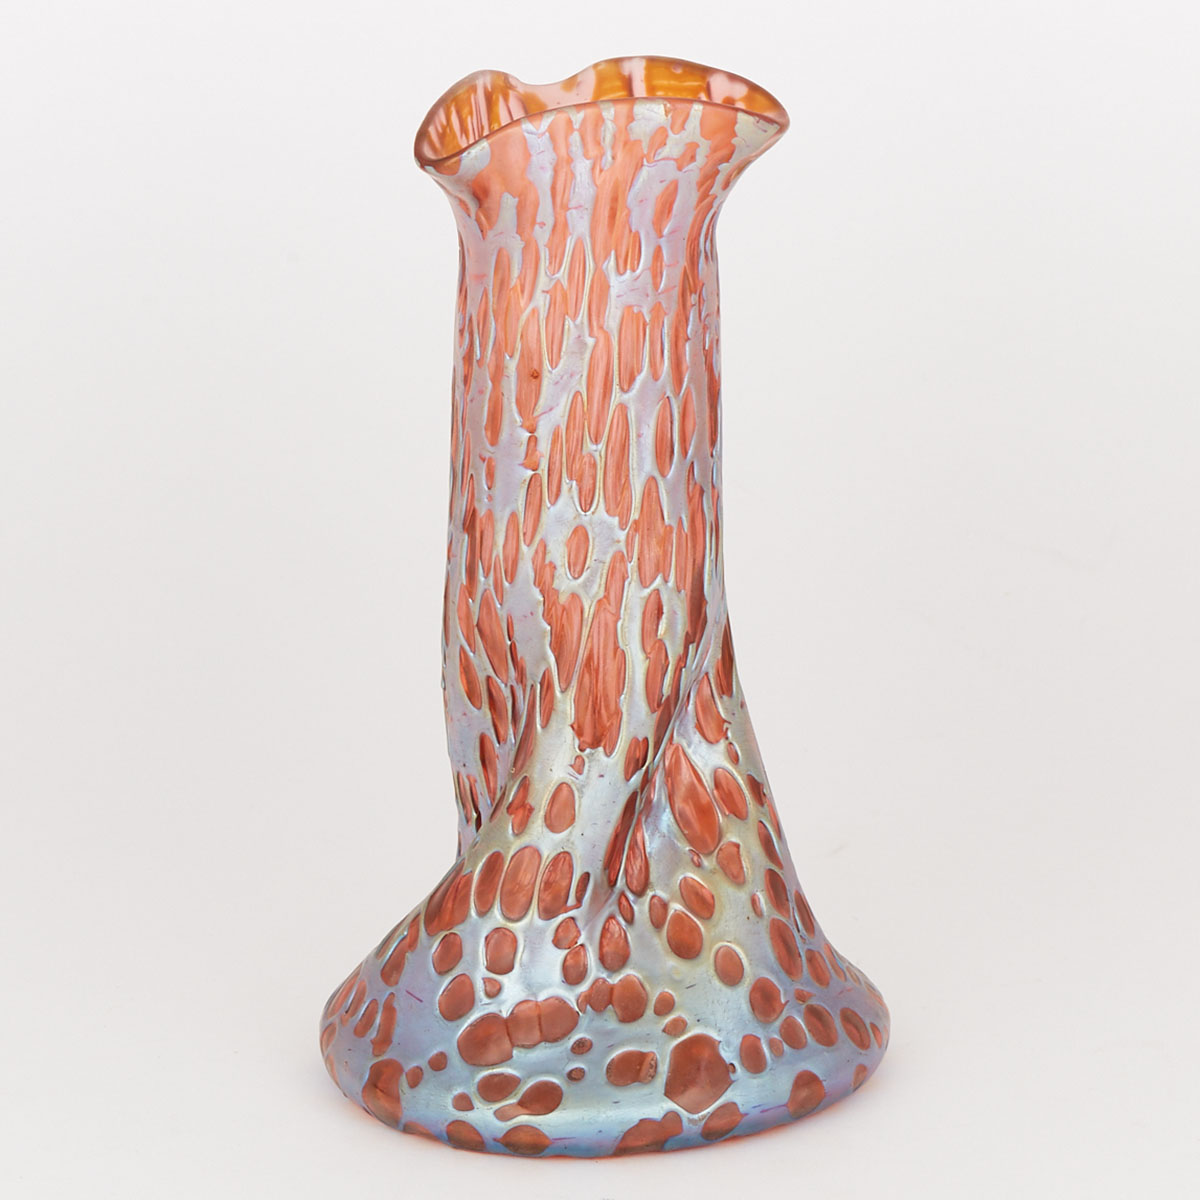 Austrian Iridescent Glass Vase, possibly Loetz, c.1900